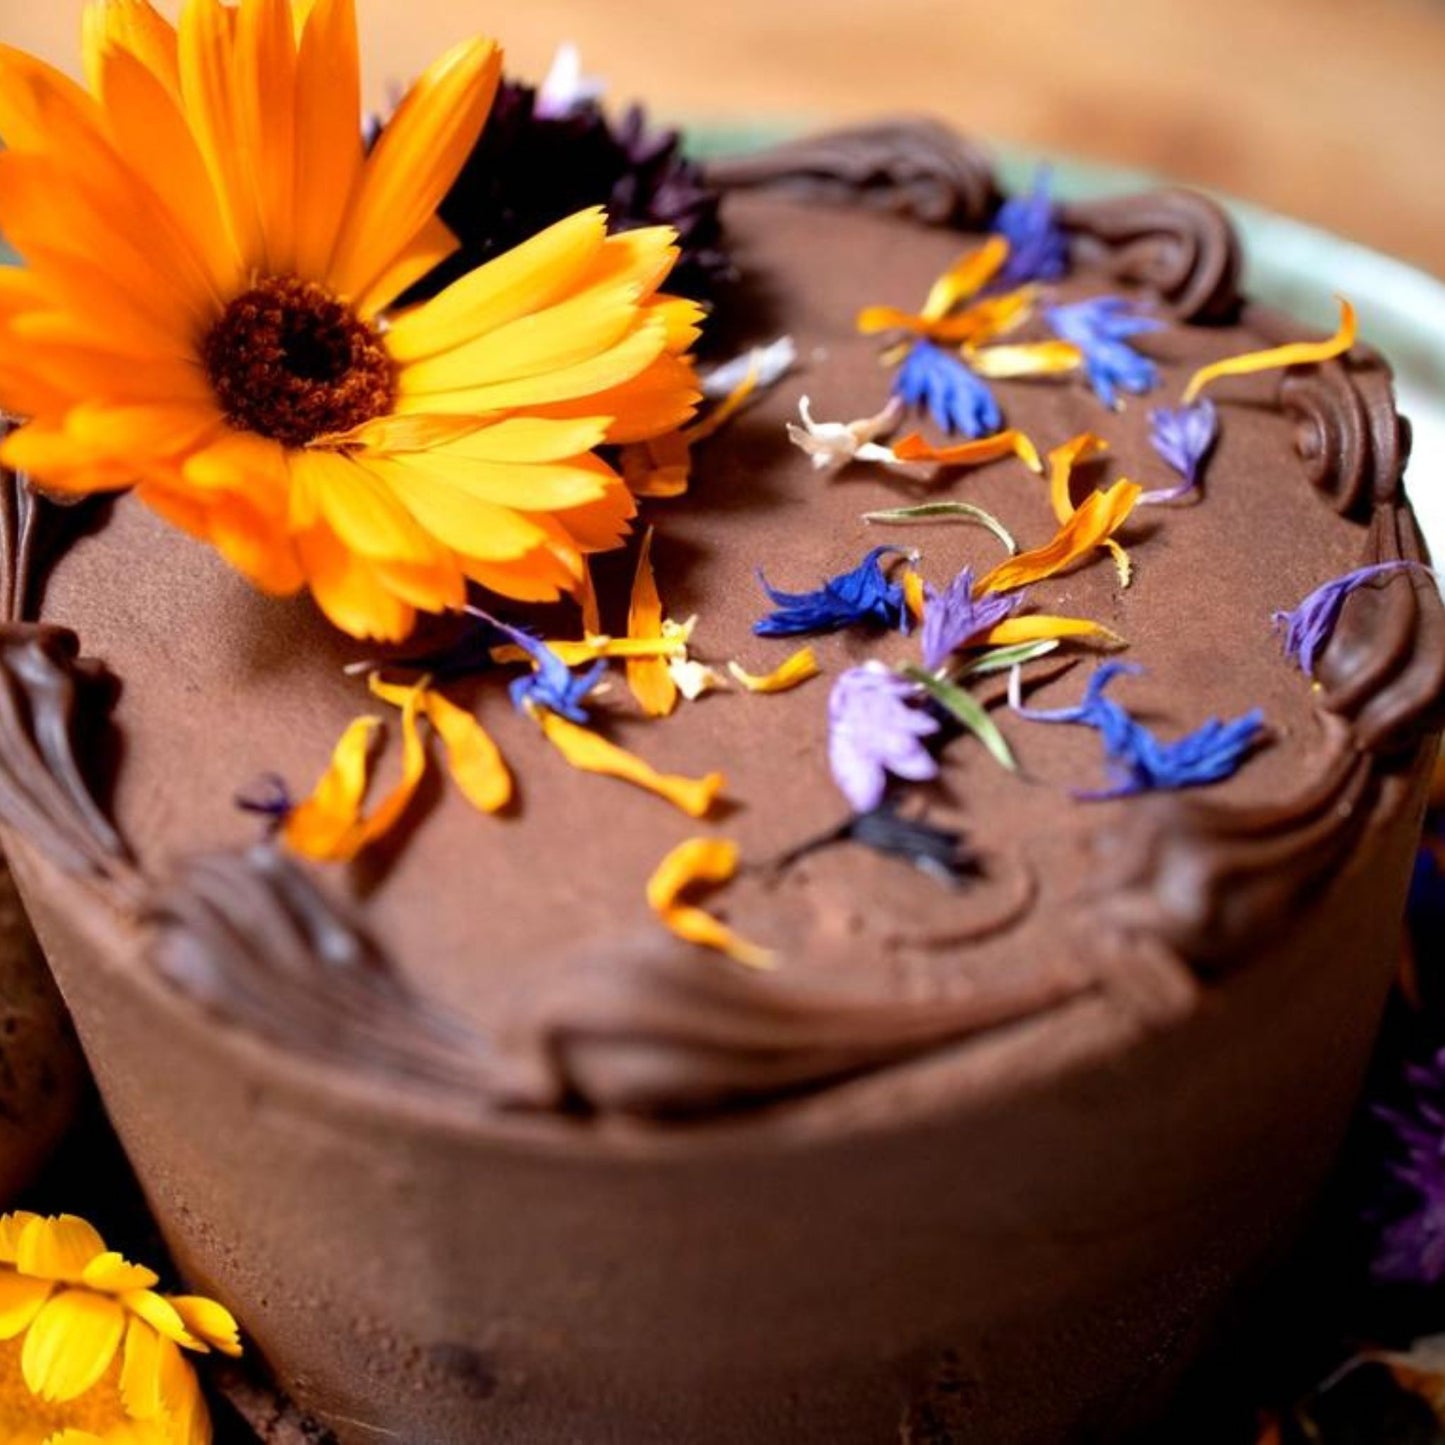 edible dried flower garnish a chocolate cake